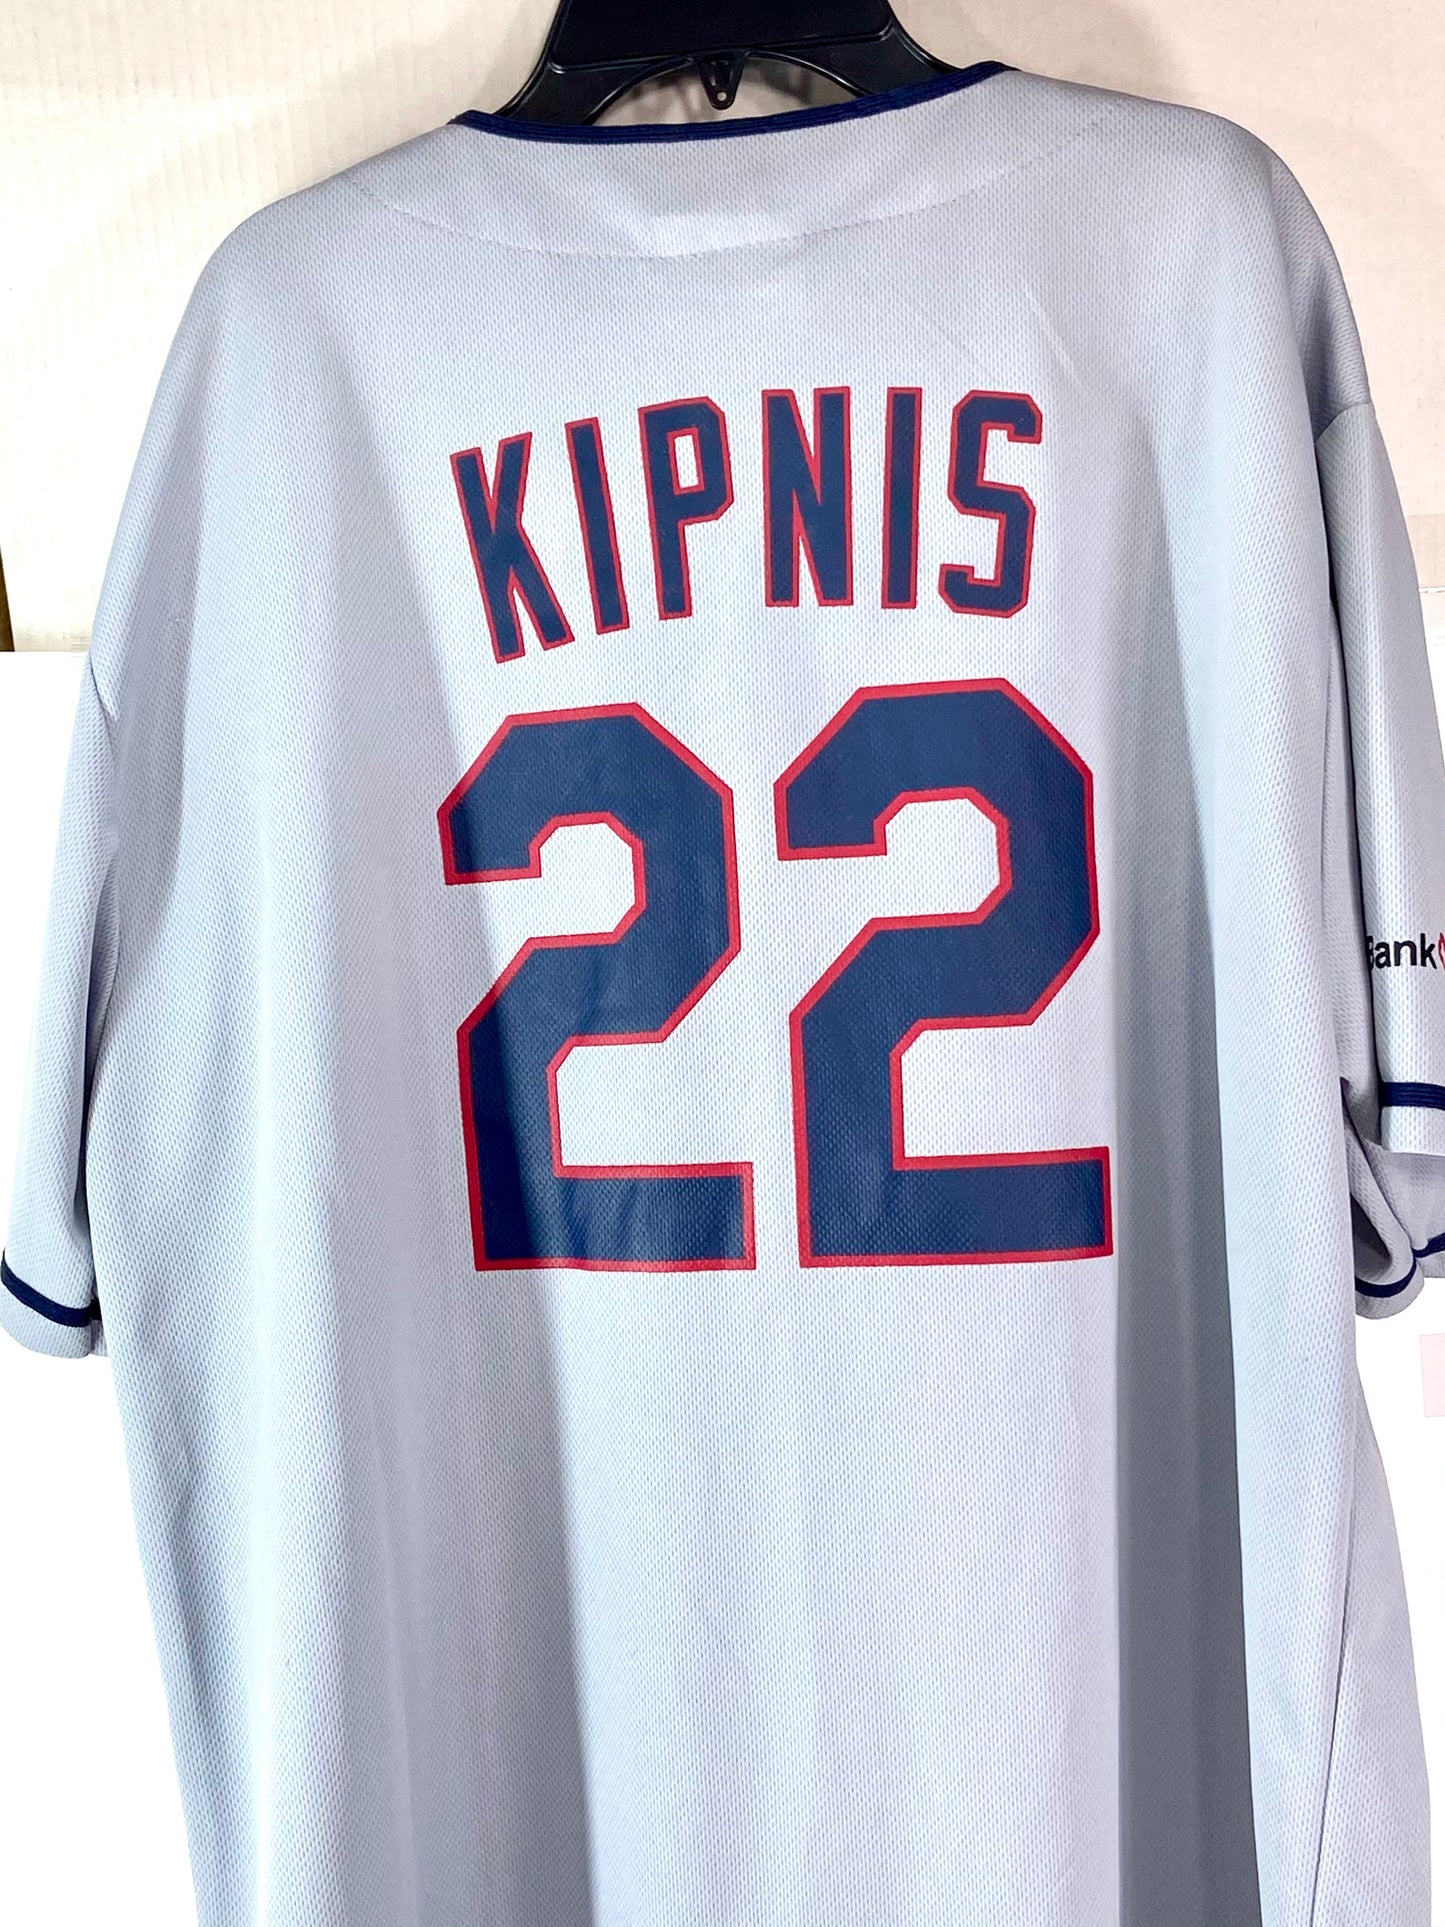 Cleveland Indians MLB Jason Kipnis Key Bank Used Promotional Jersey by Match-Up